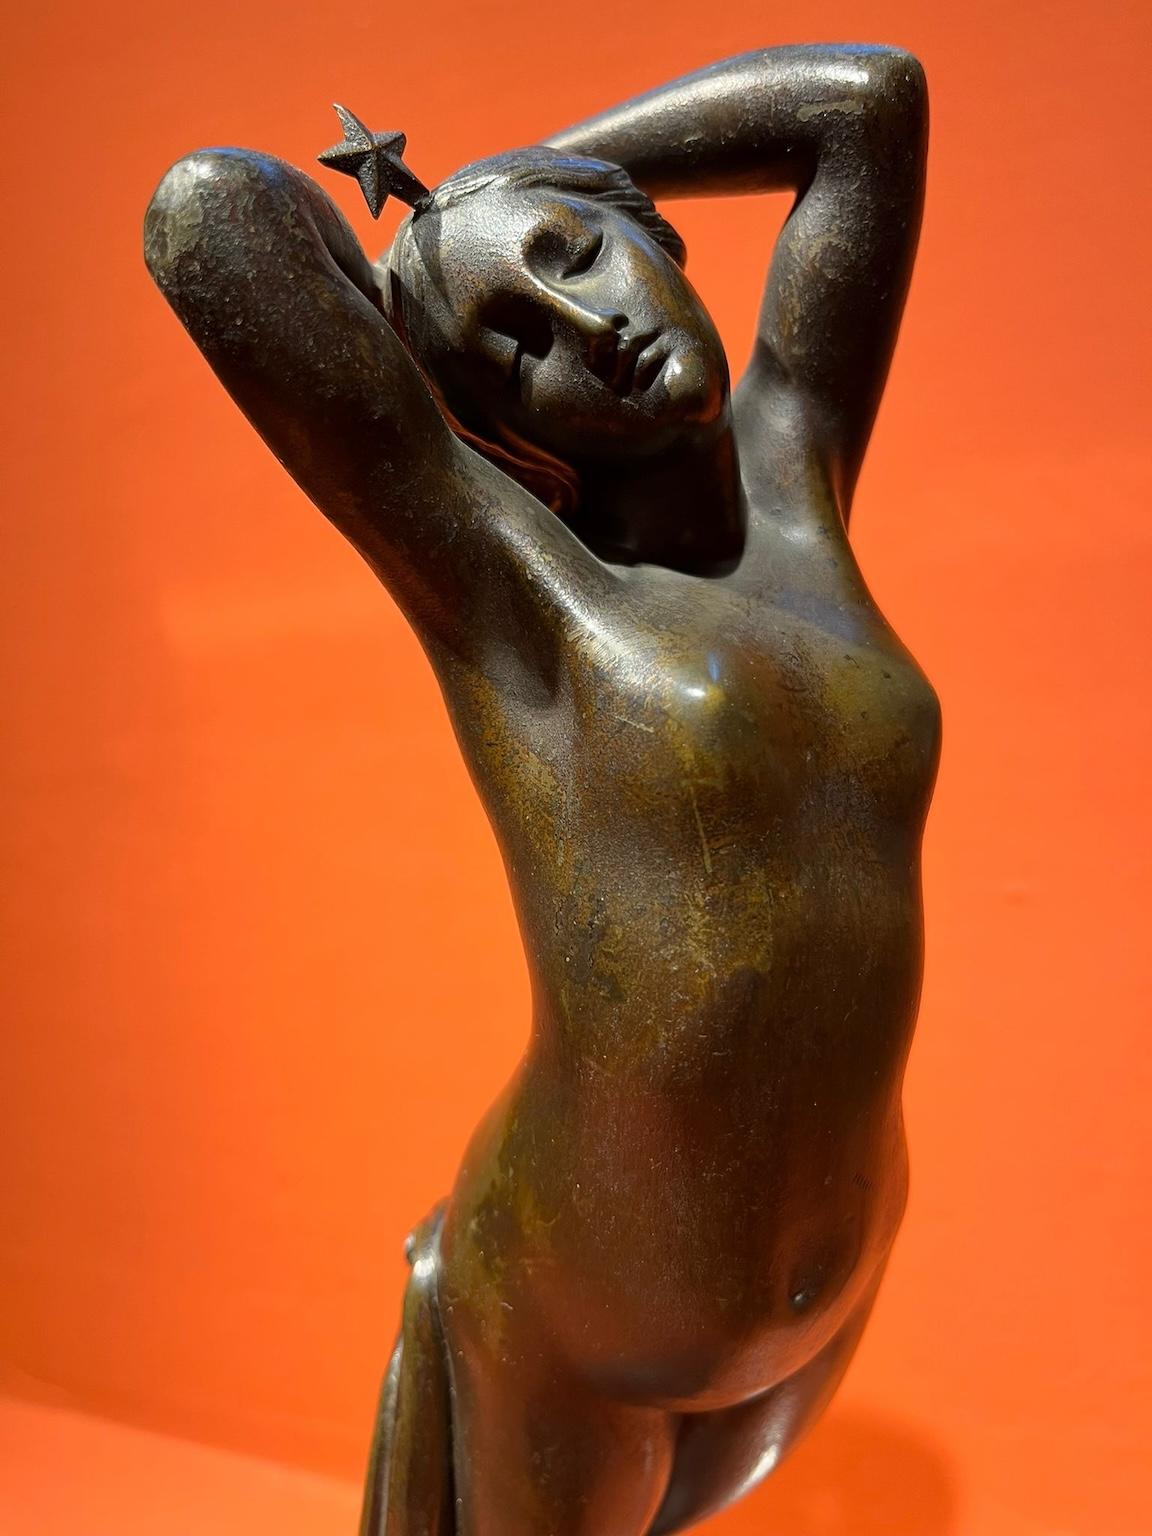 Joseph Pollet Nude Sculpture - 19th century French mythological figurative female bronze statuette